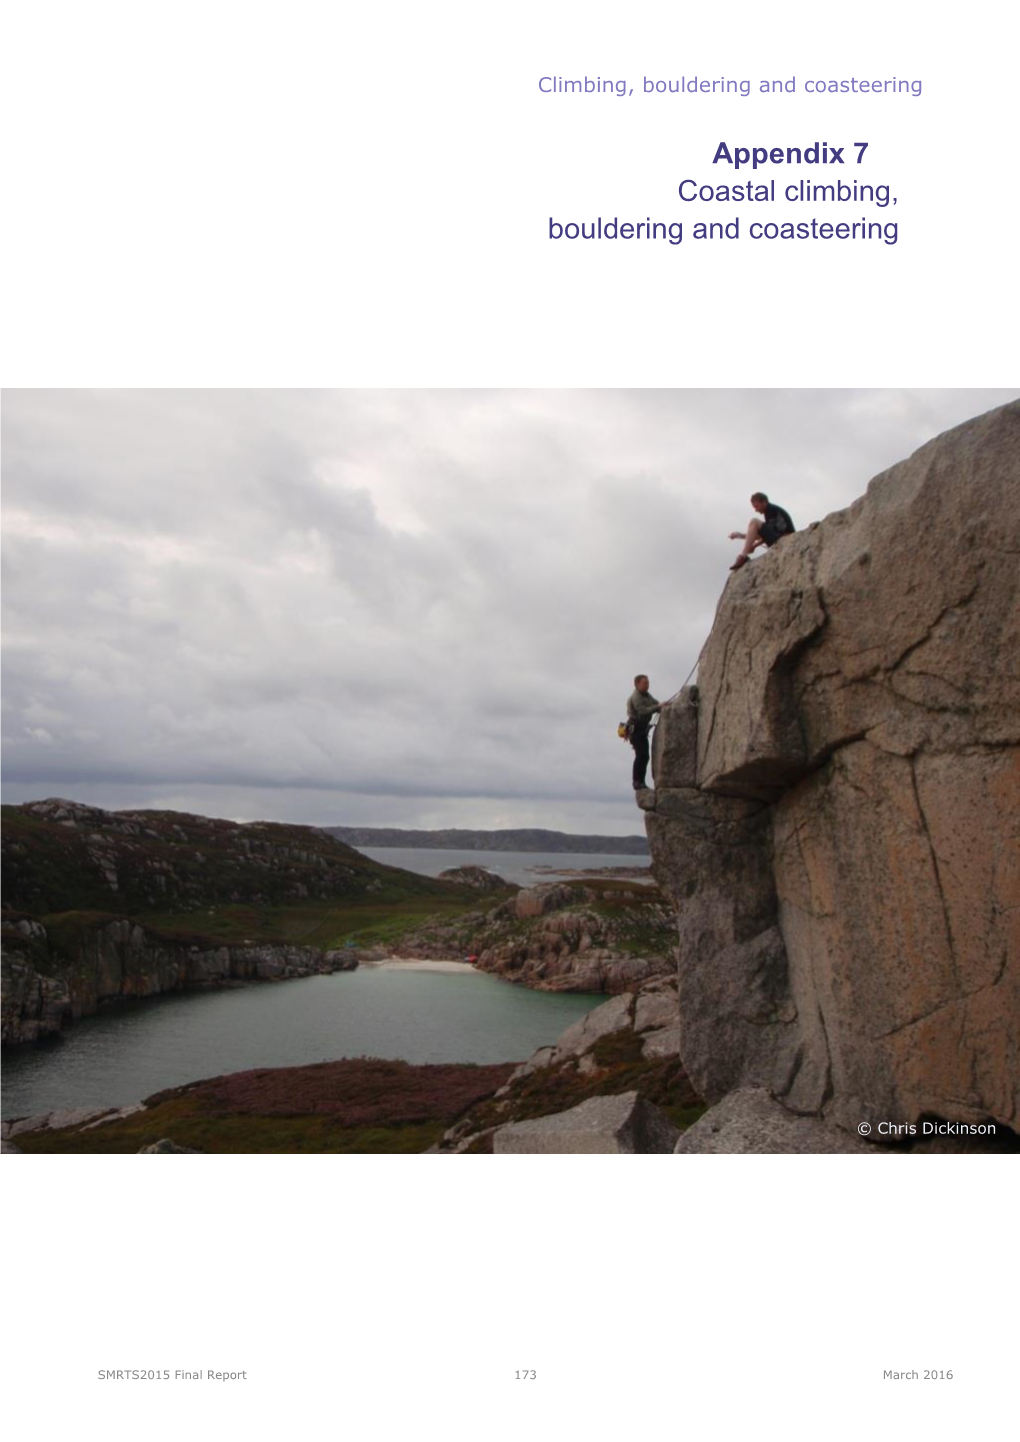 Coastal Climbing, Bouldering and Coasteering